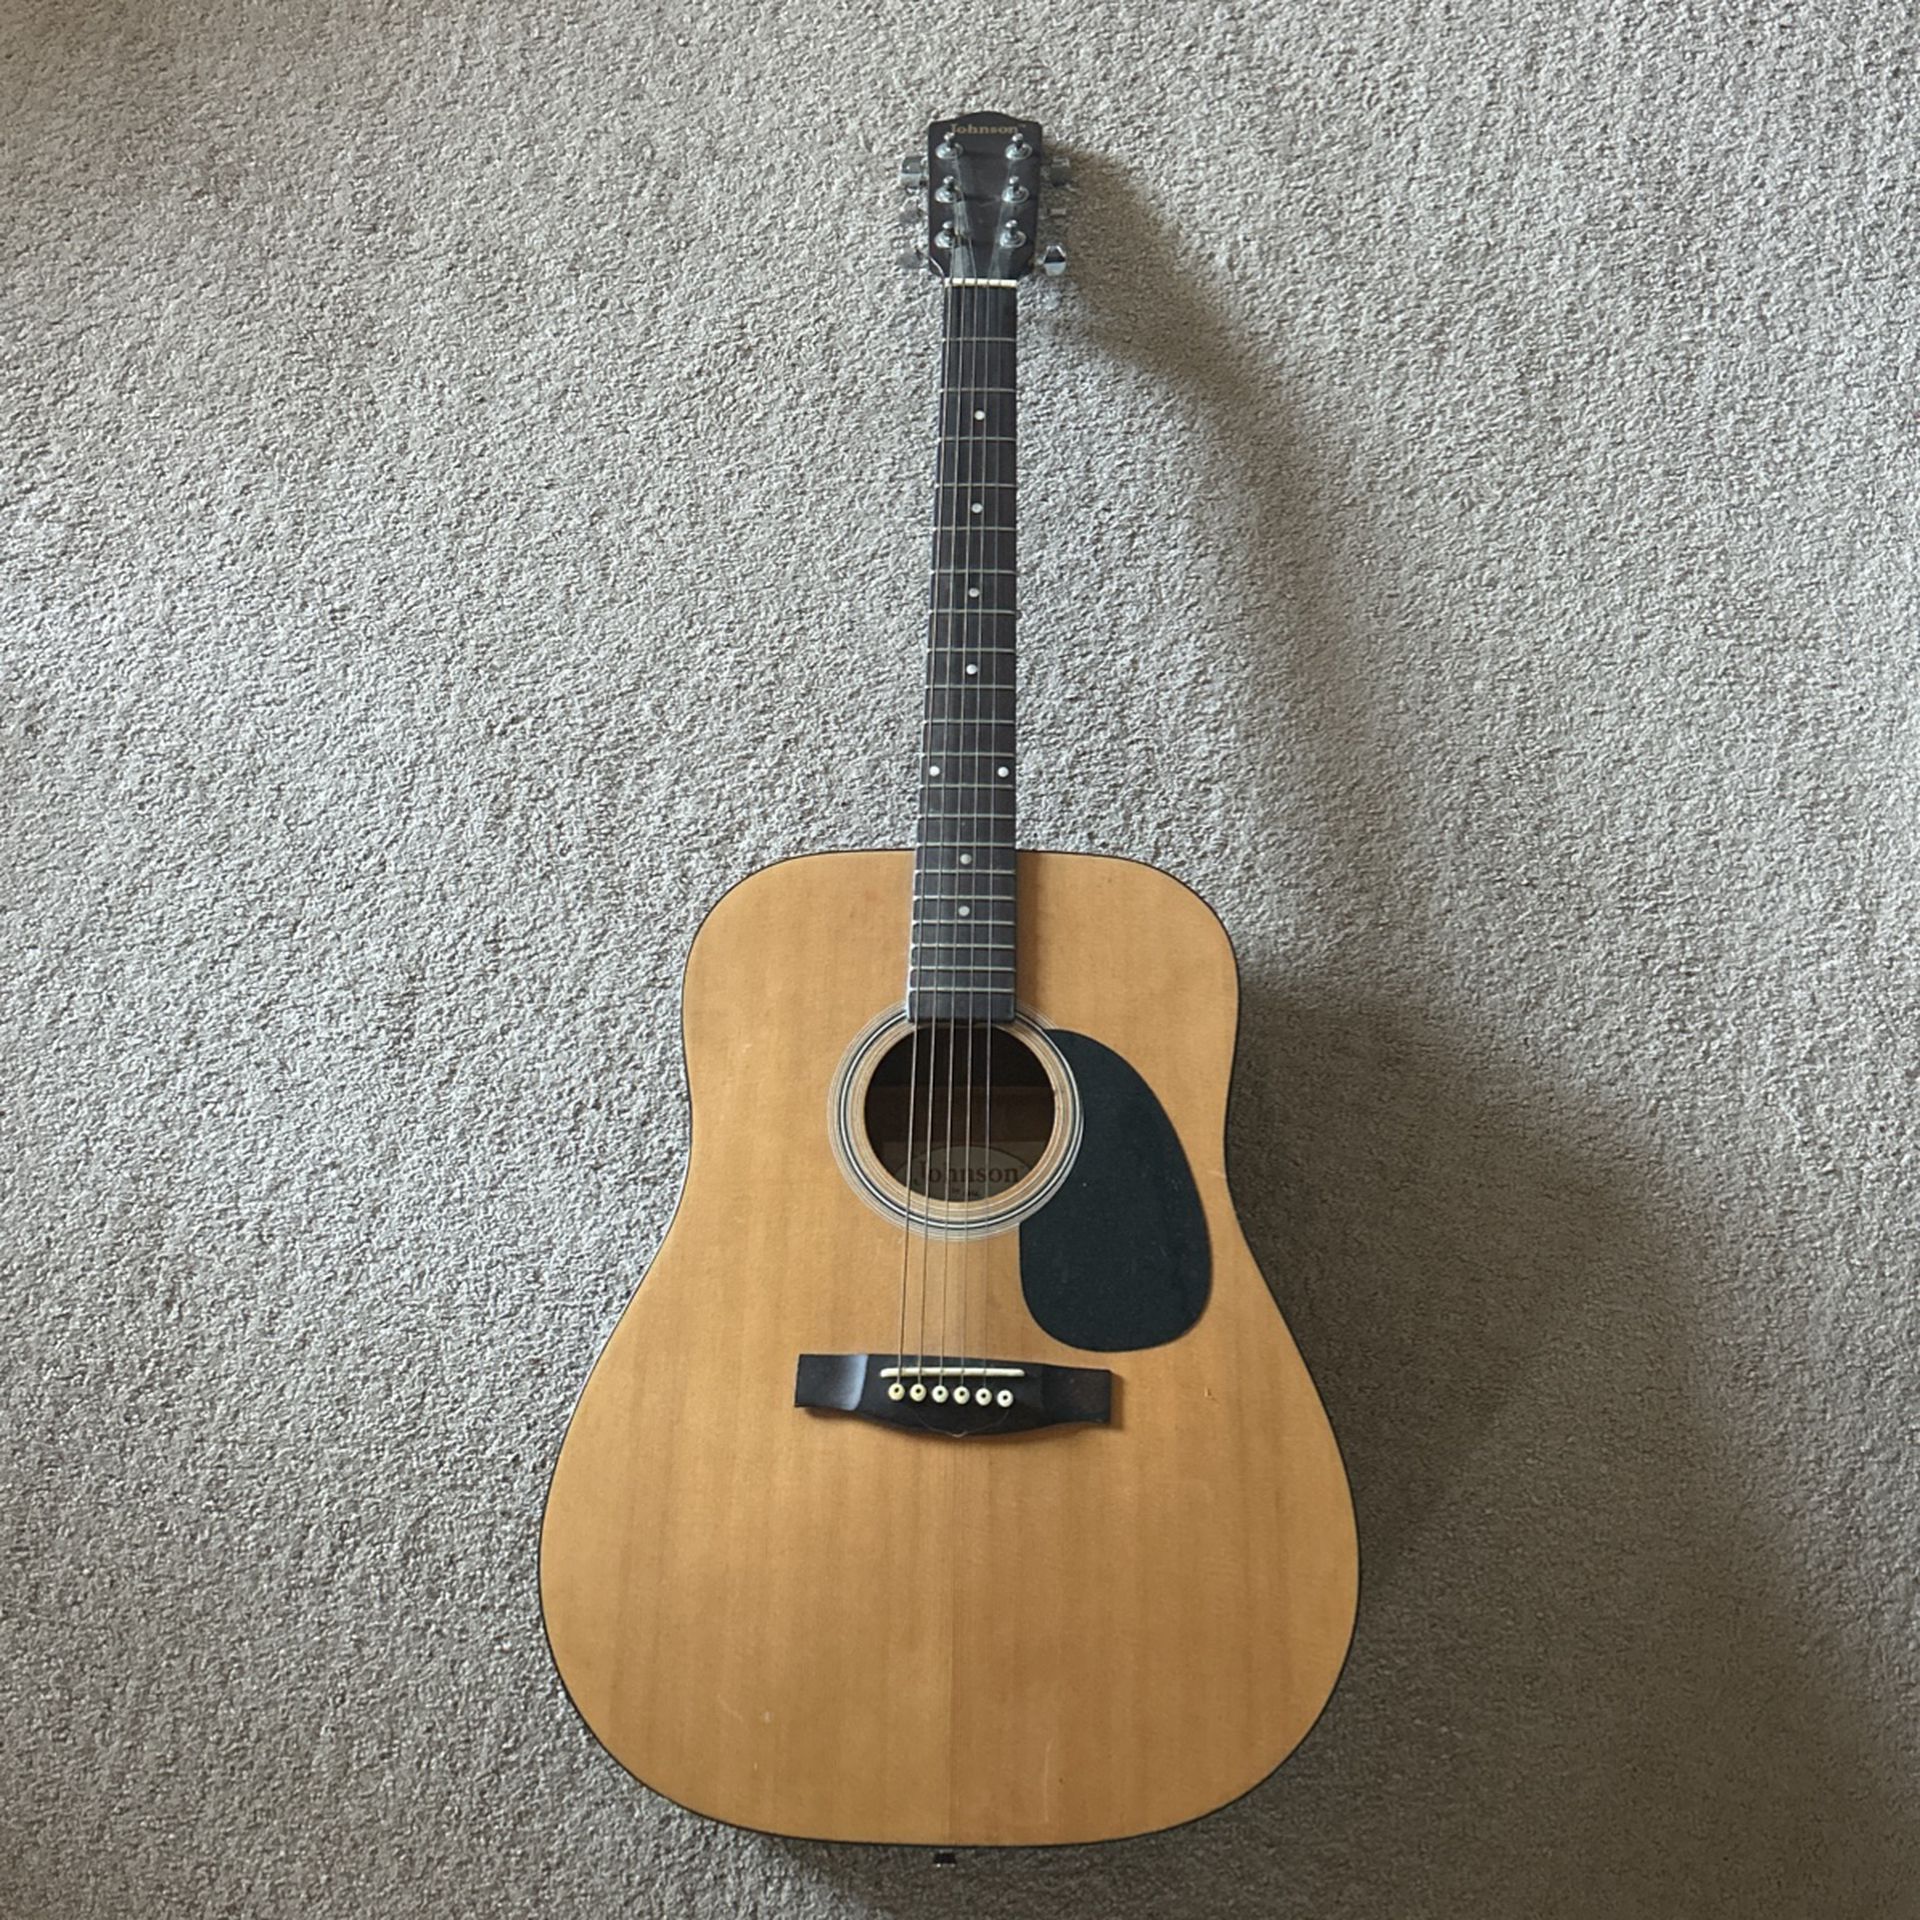 Johnson Guitar